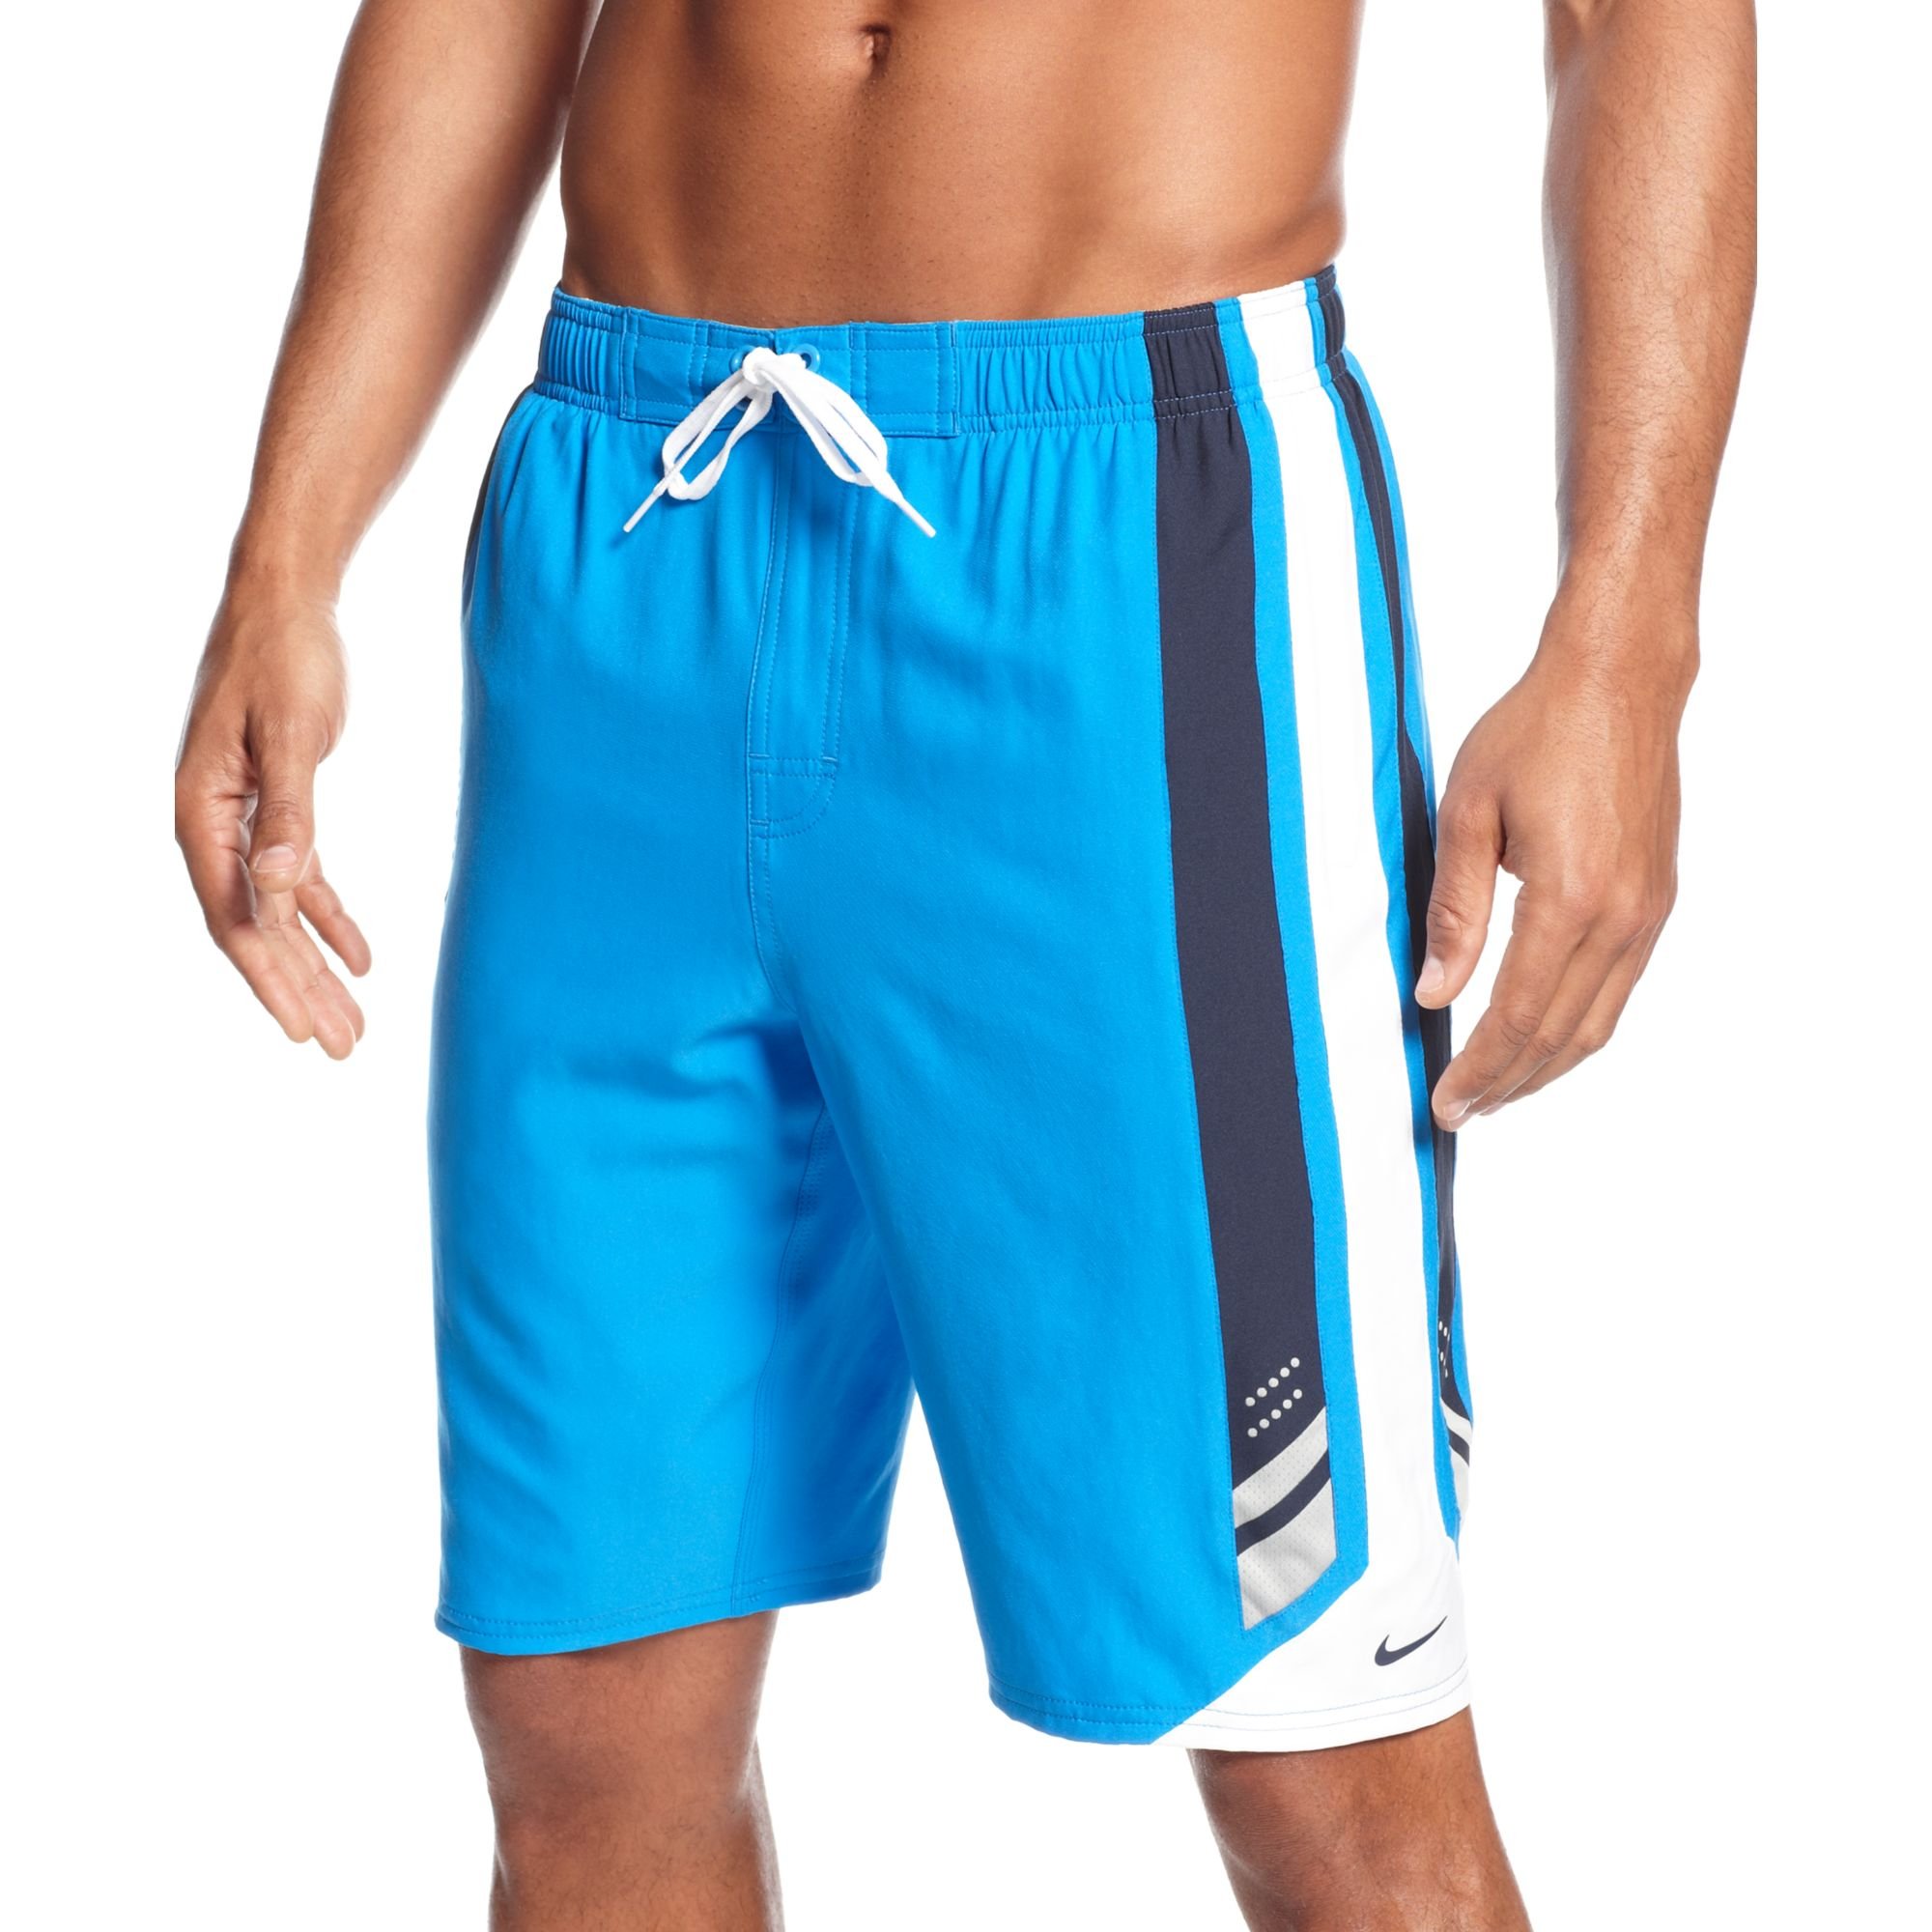 Lyst - Nike Transcend 11 Volley Dri Fit Swim Shorts in Blue for Men